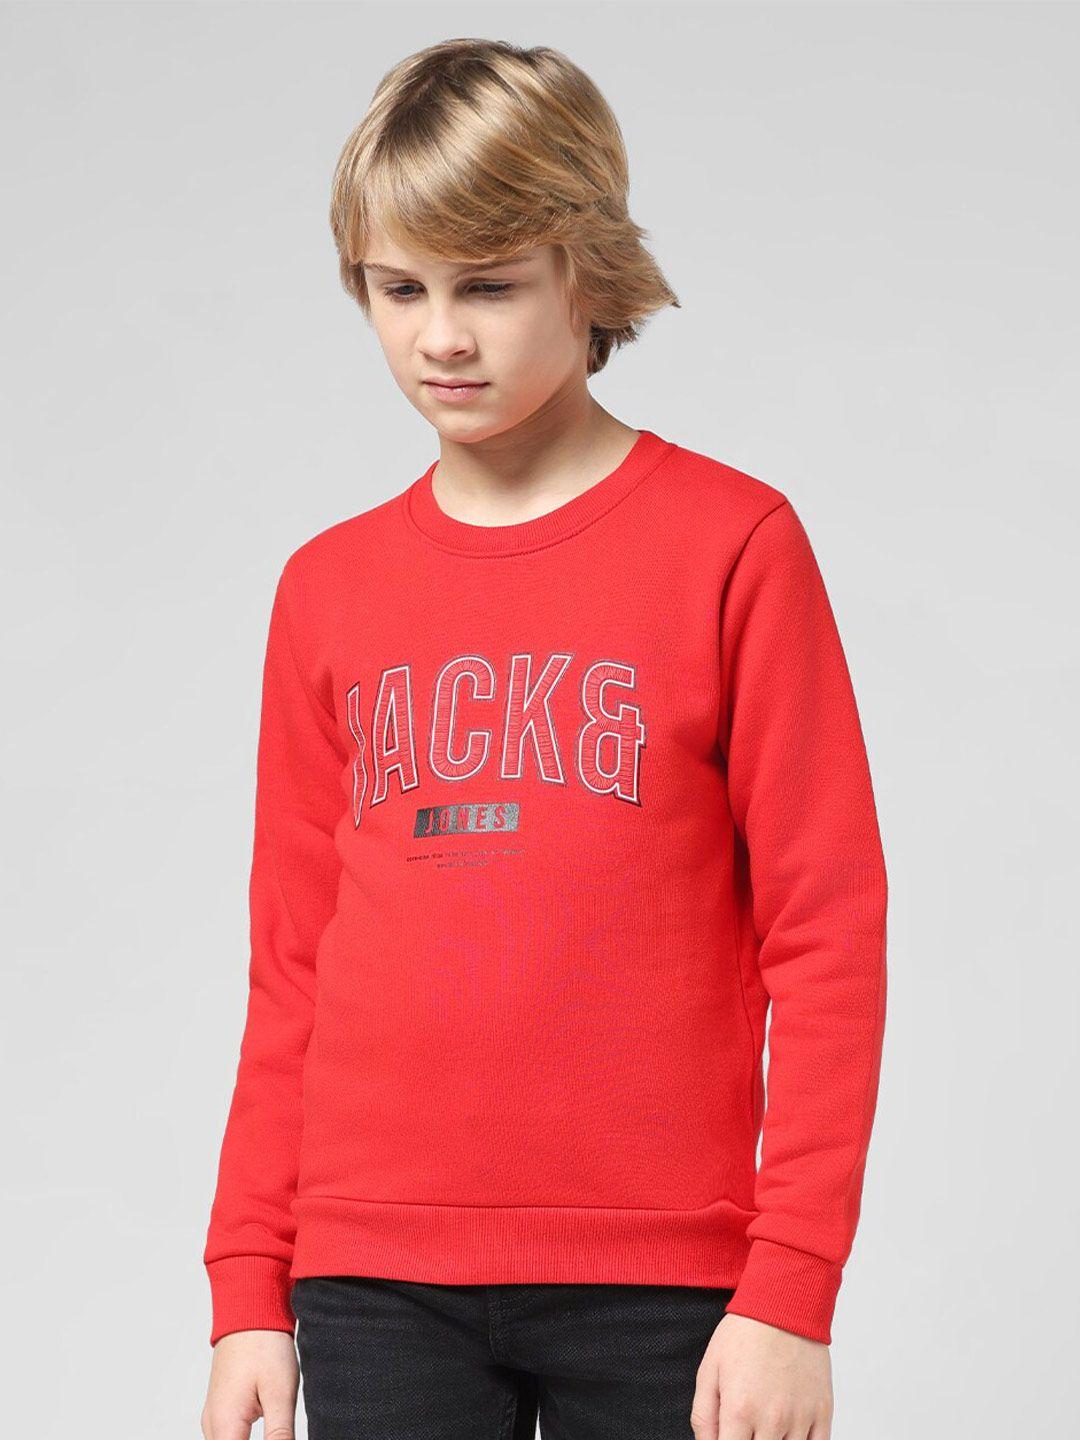 jack & jones junior boys typography printed pullover